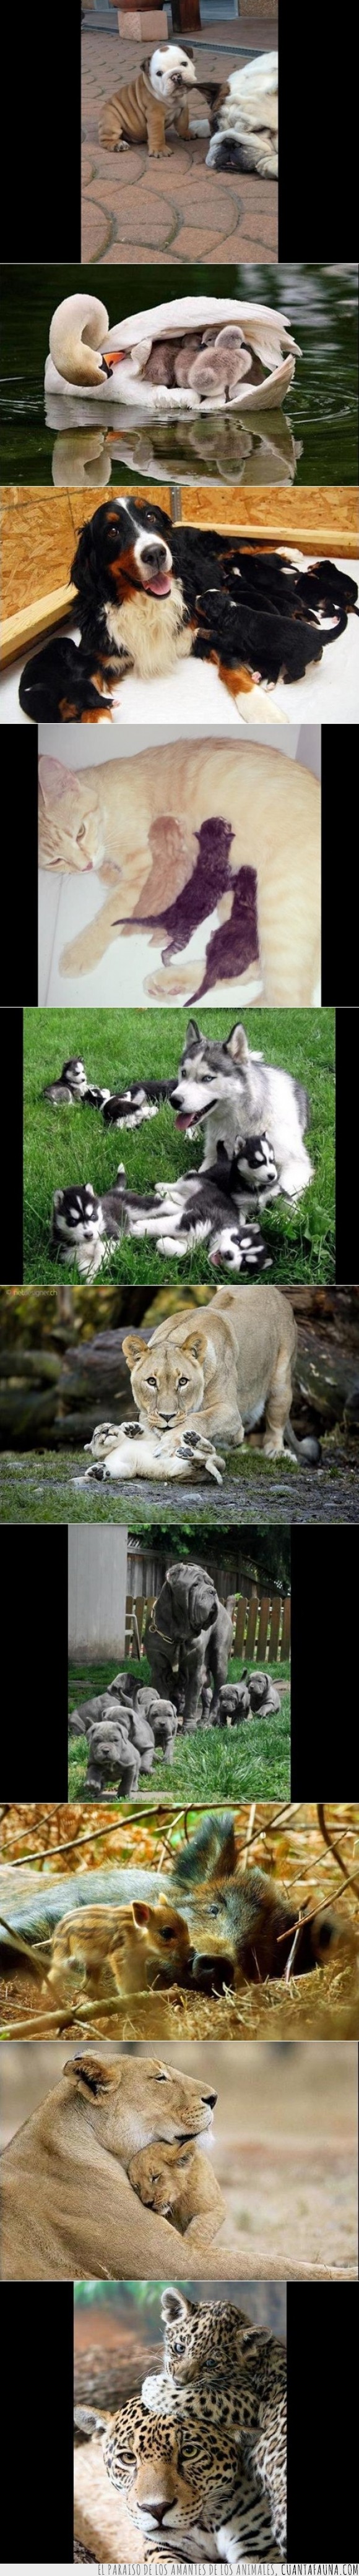 amor de la madre,cachorro,enternecedor,gatos,jabalí,leona,leopardo,madres,perros,Reino animal,tiernos